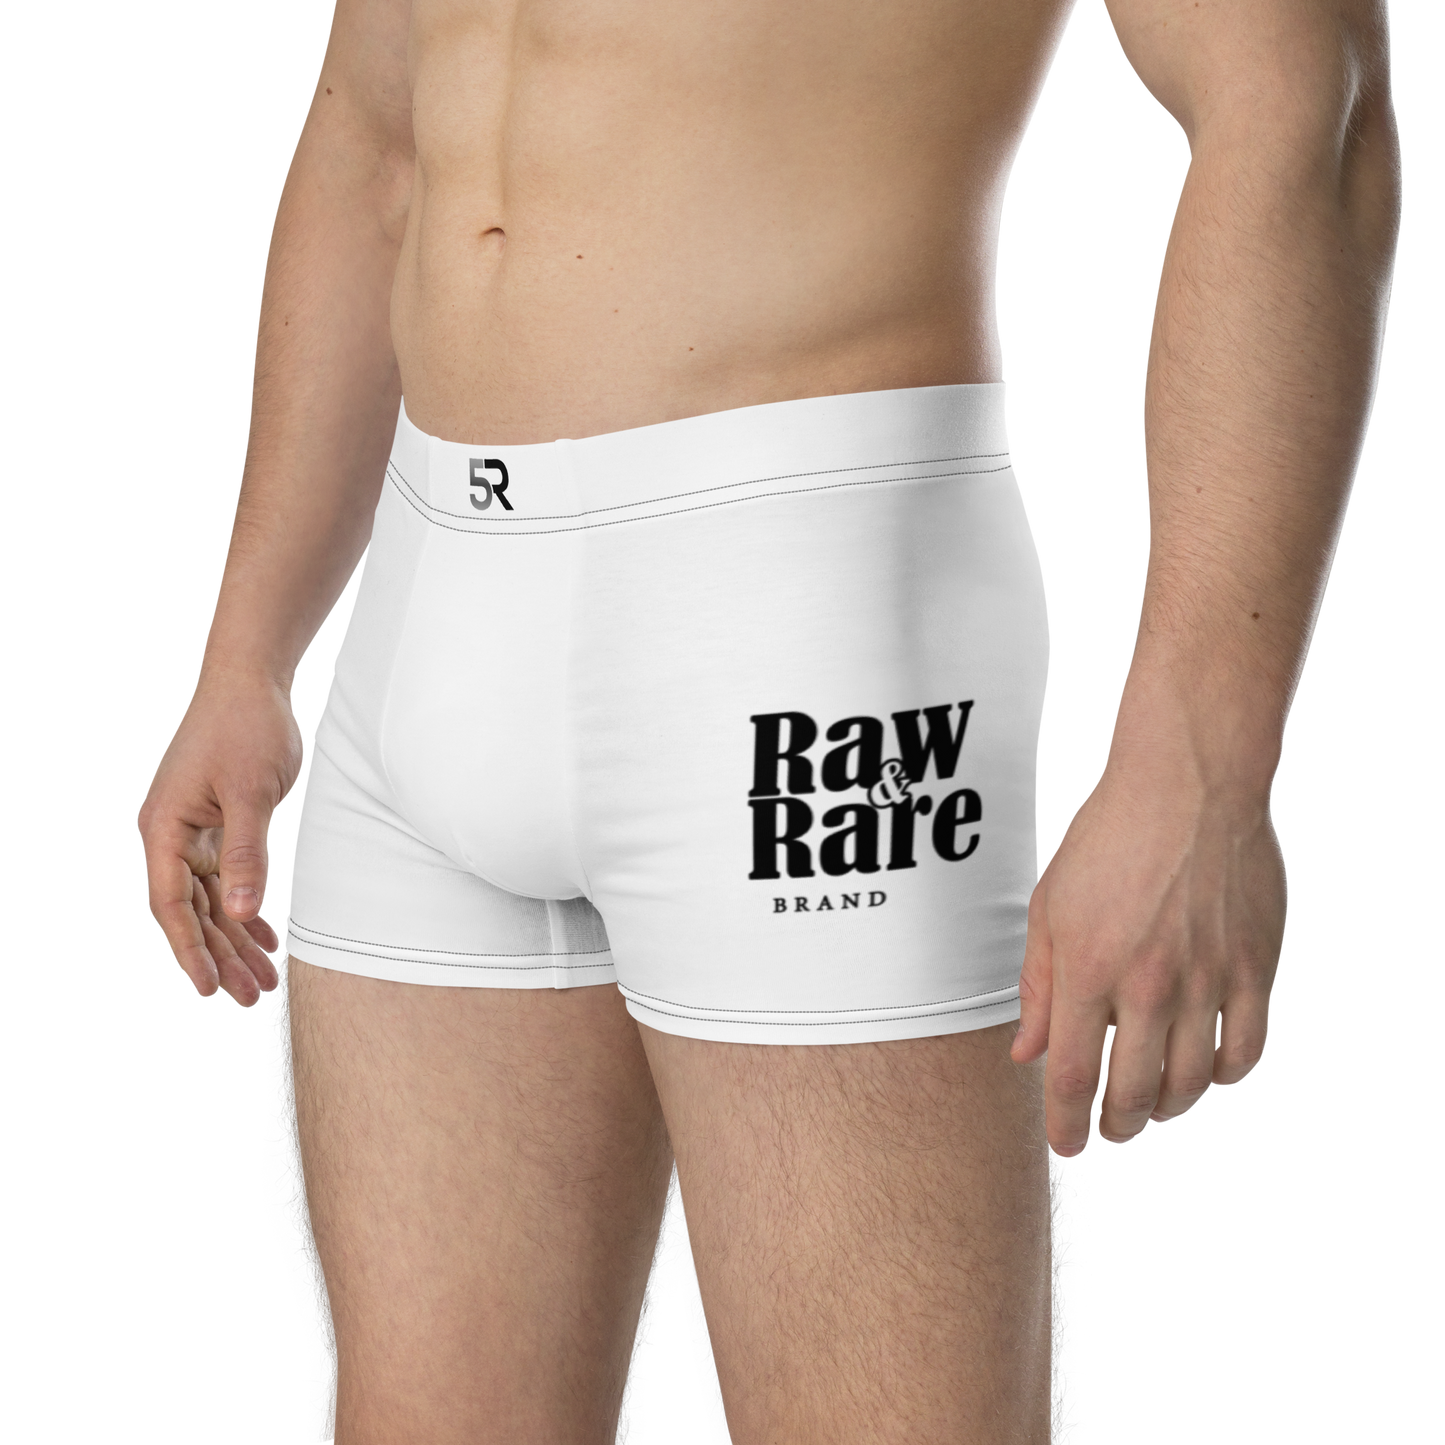 Raw & Rare Brand Boxer Briefs